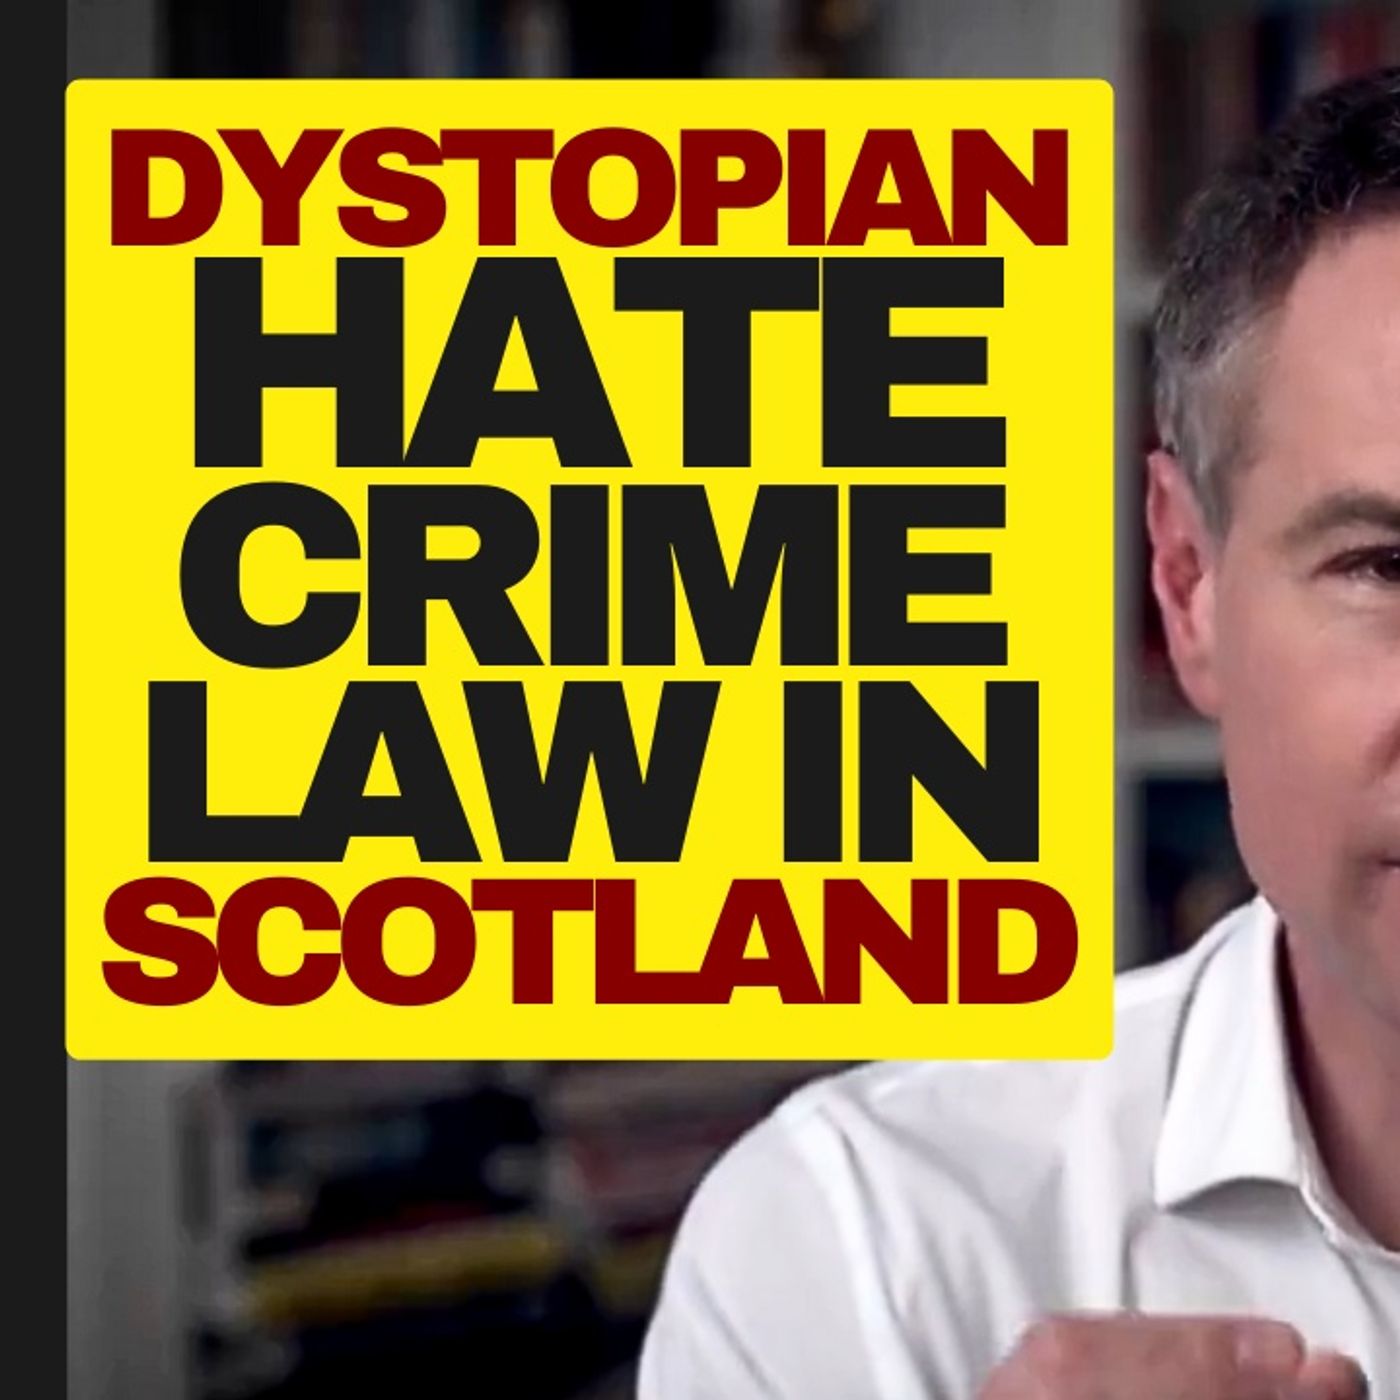 Michael Shellenberger On Scotland's Dystopian Censorship Law